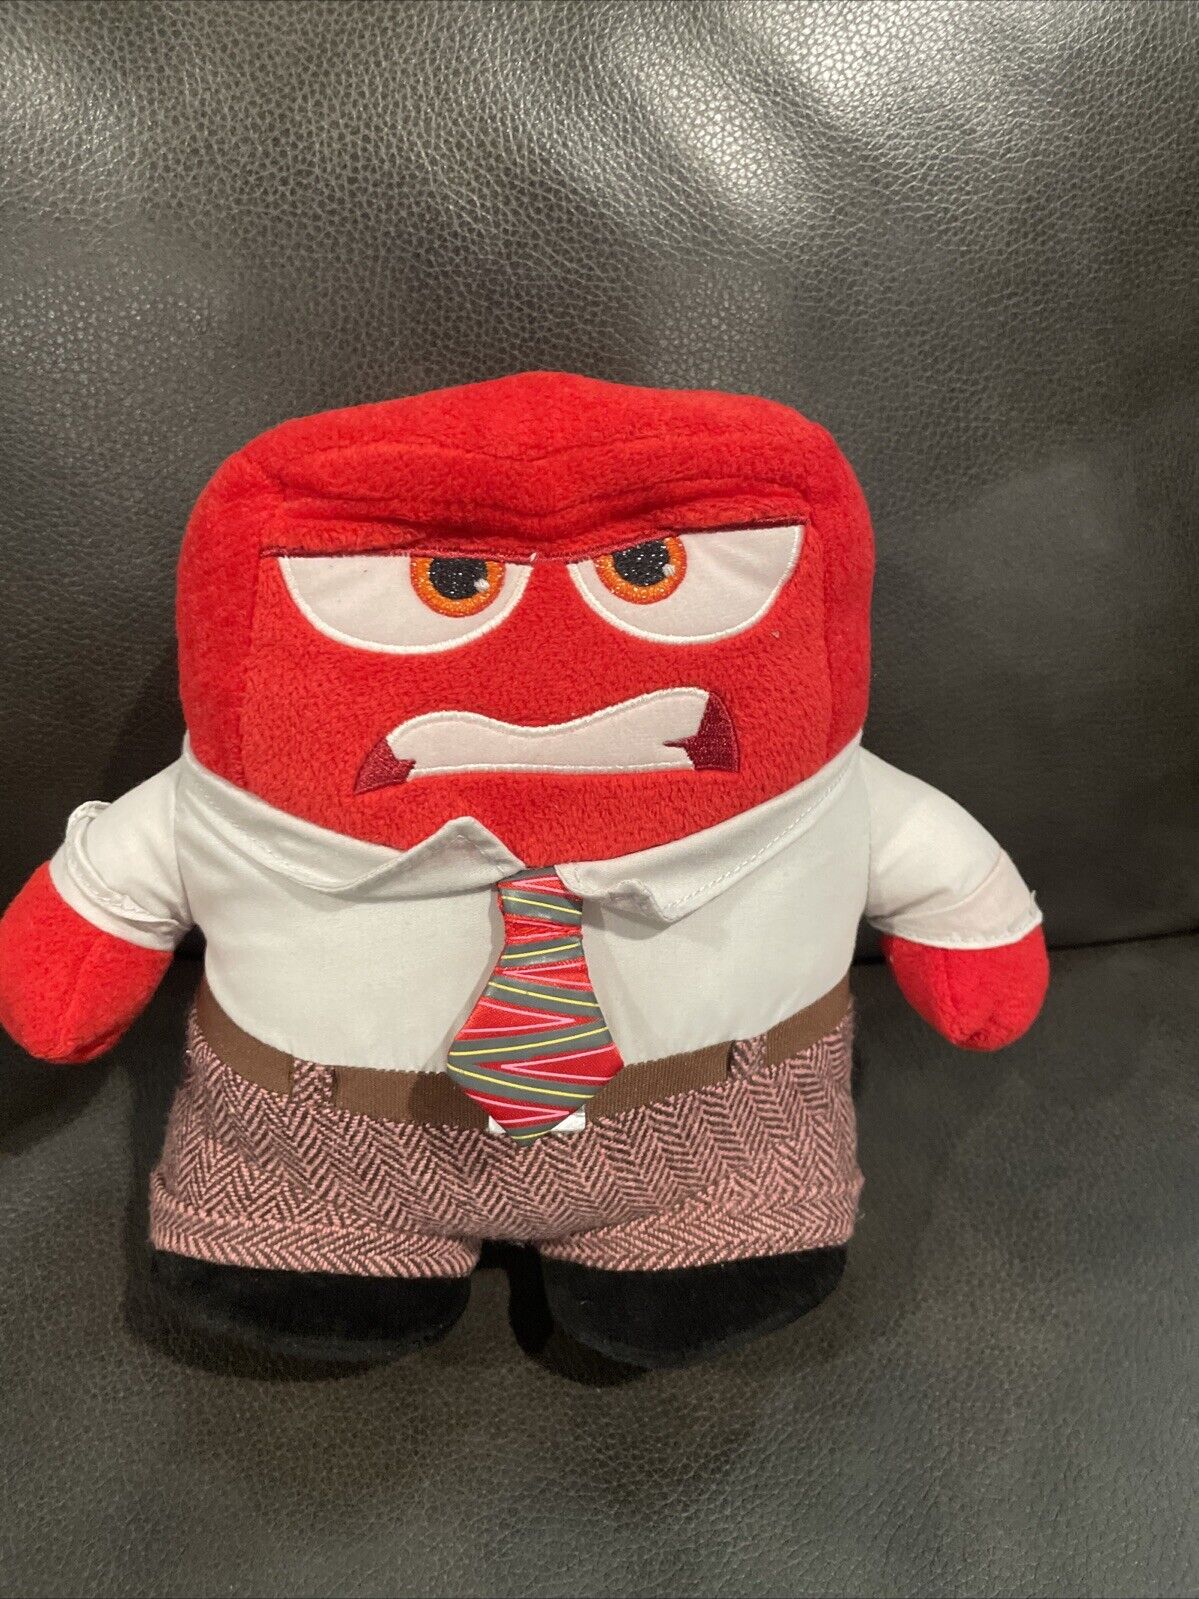 Disney Pixar Inside Out Anger Plush Stuffed Toy